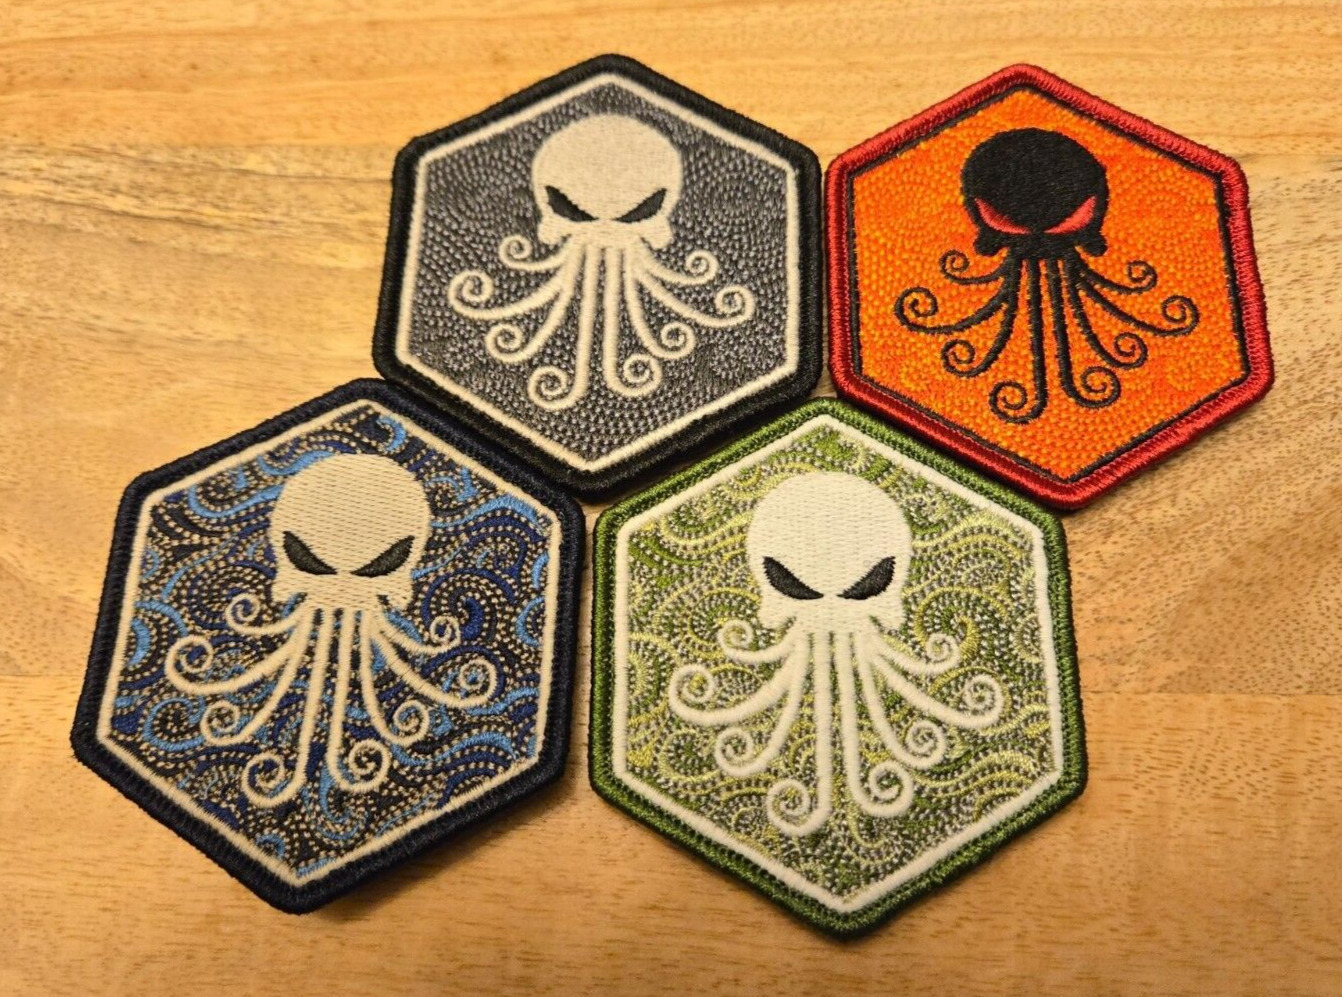 PDW - Prometheus Design Werx patches - Kraken / Octopus Set of 4